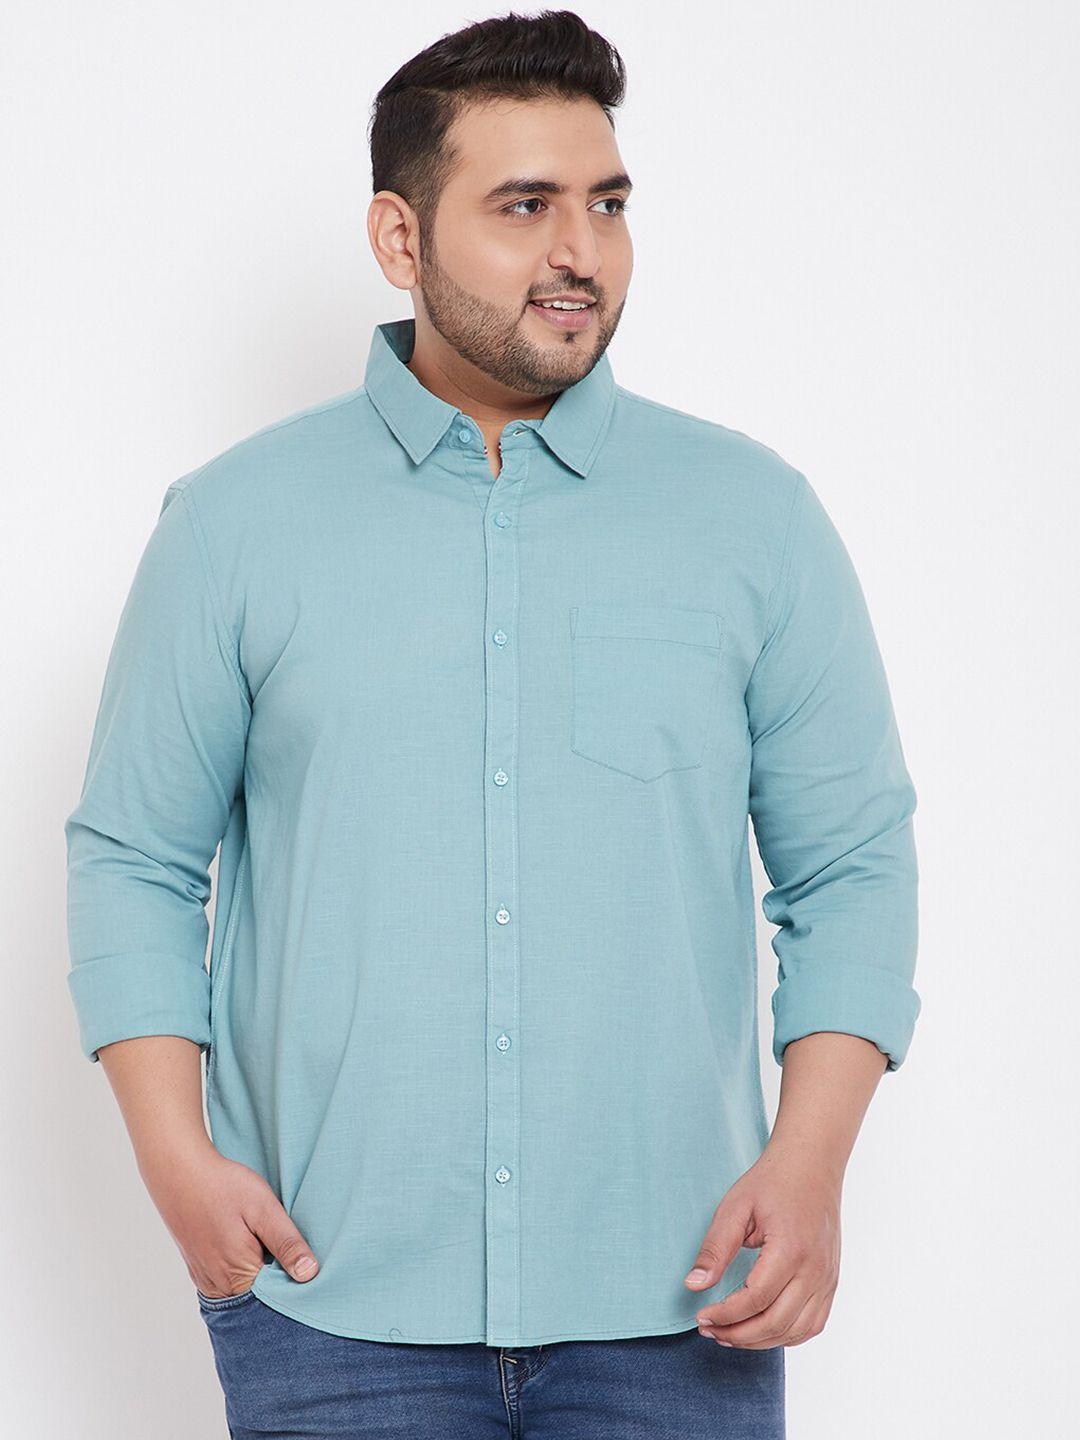 instafab-plus-men-blue-regular-fit-solid-plus-size-casual-shirt